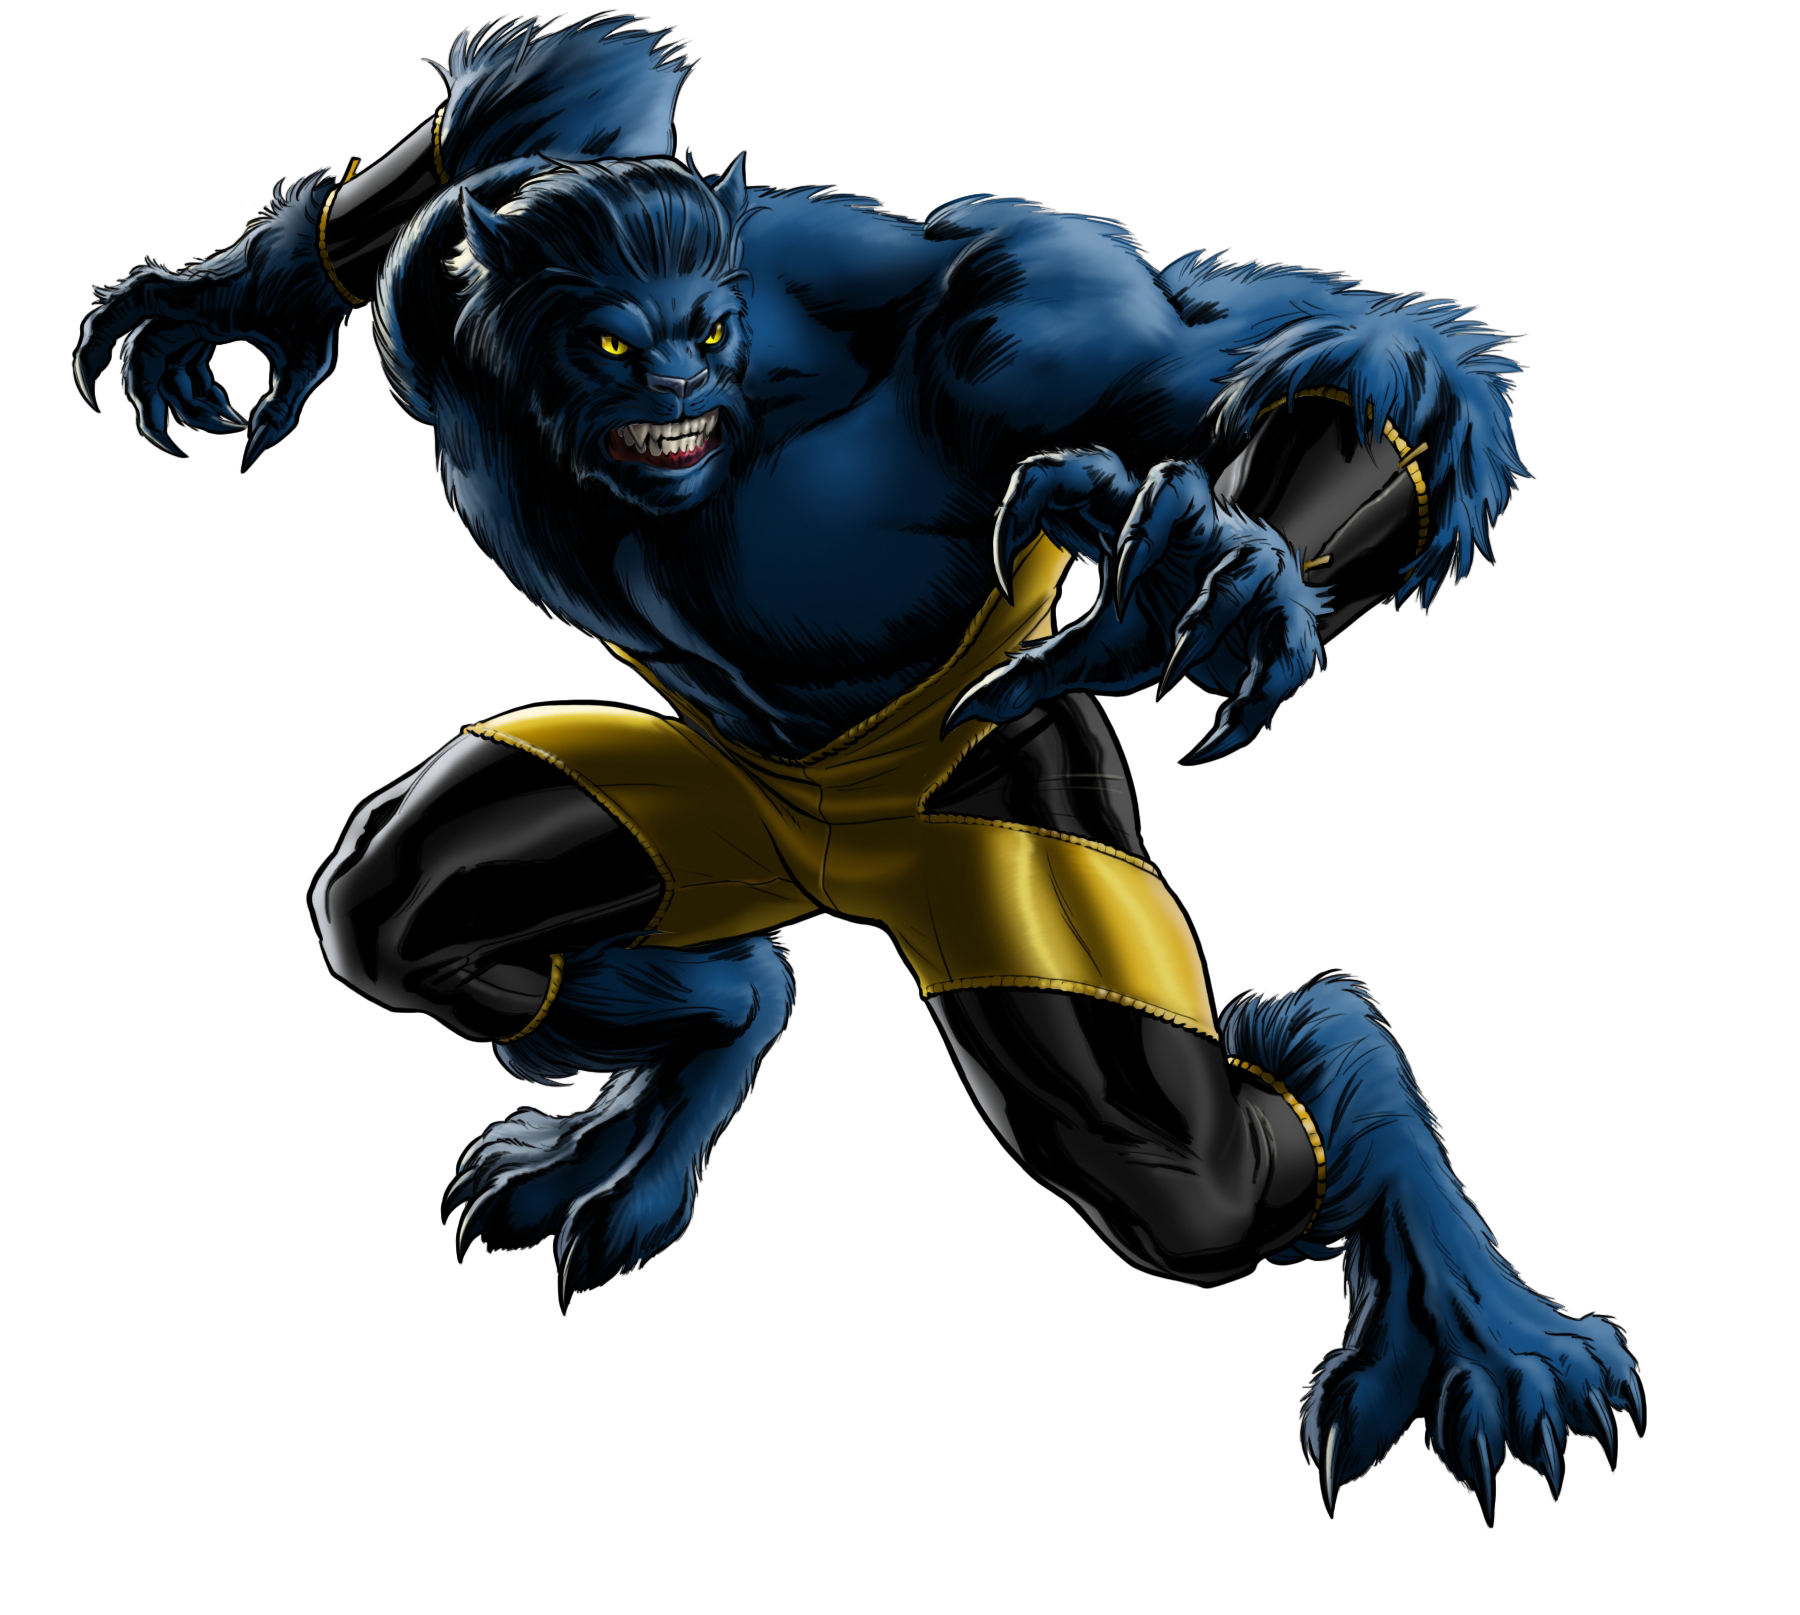 Beast (Marvel Comics) - Wikipedia